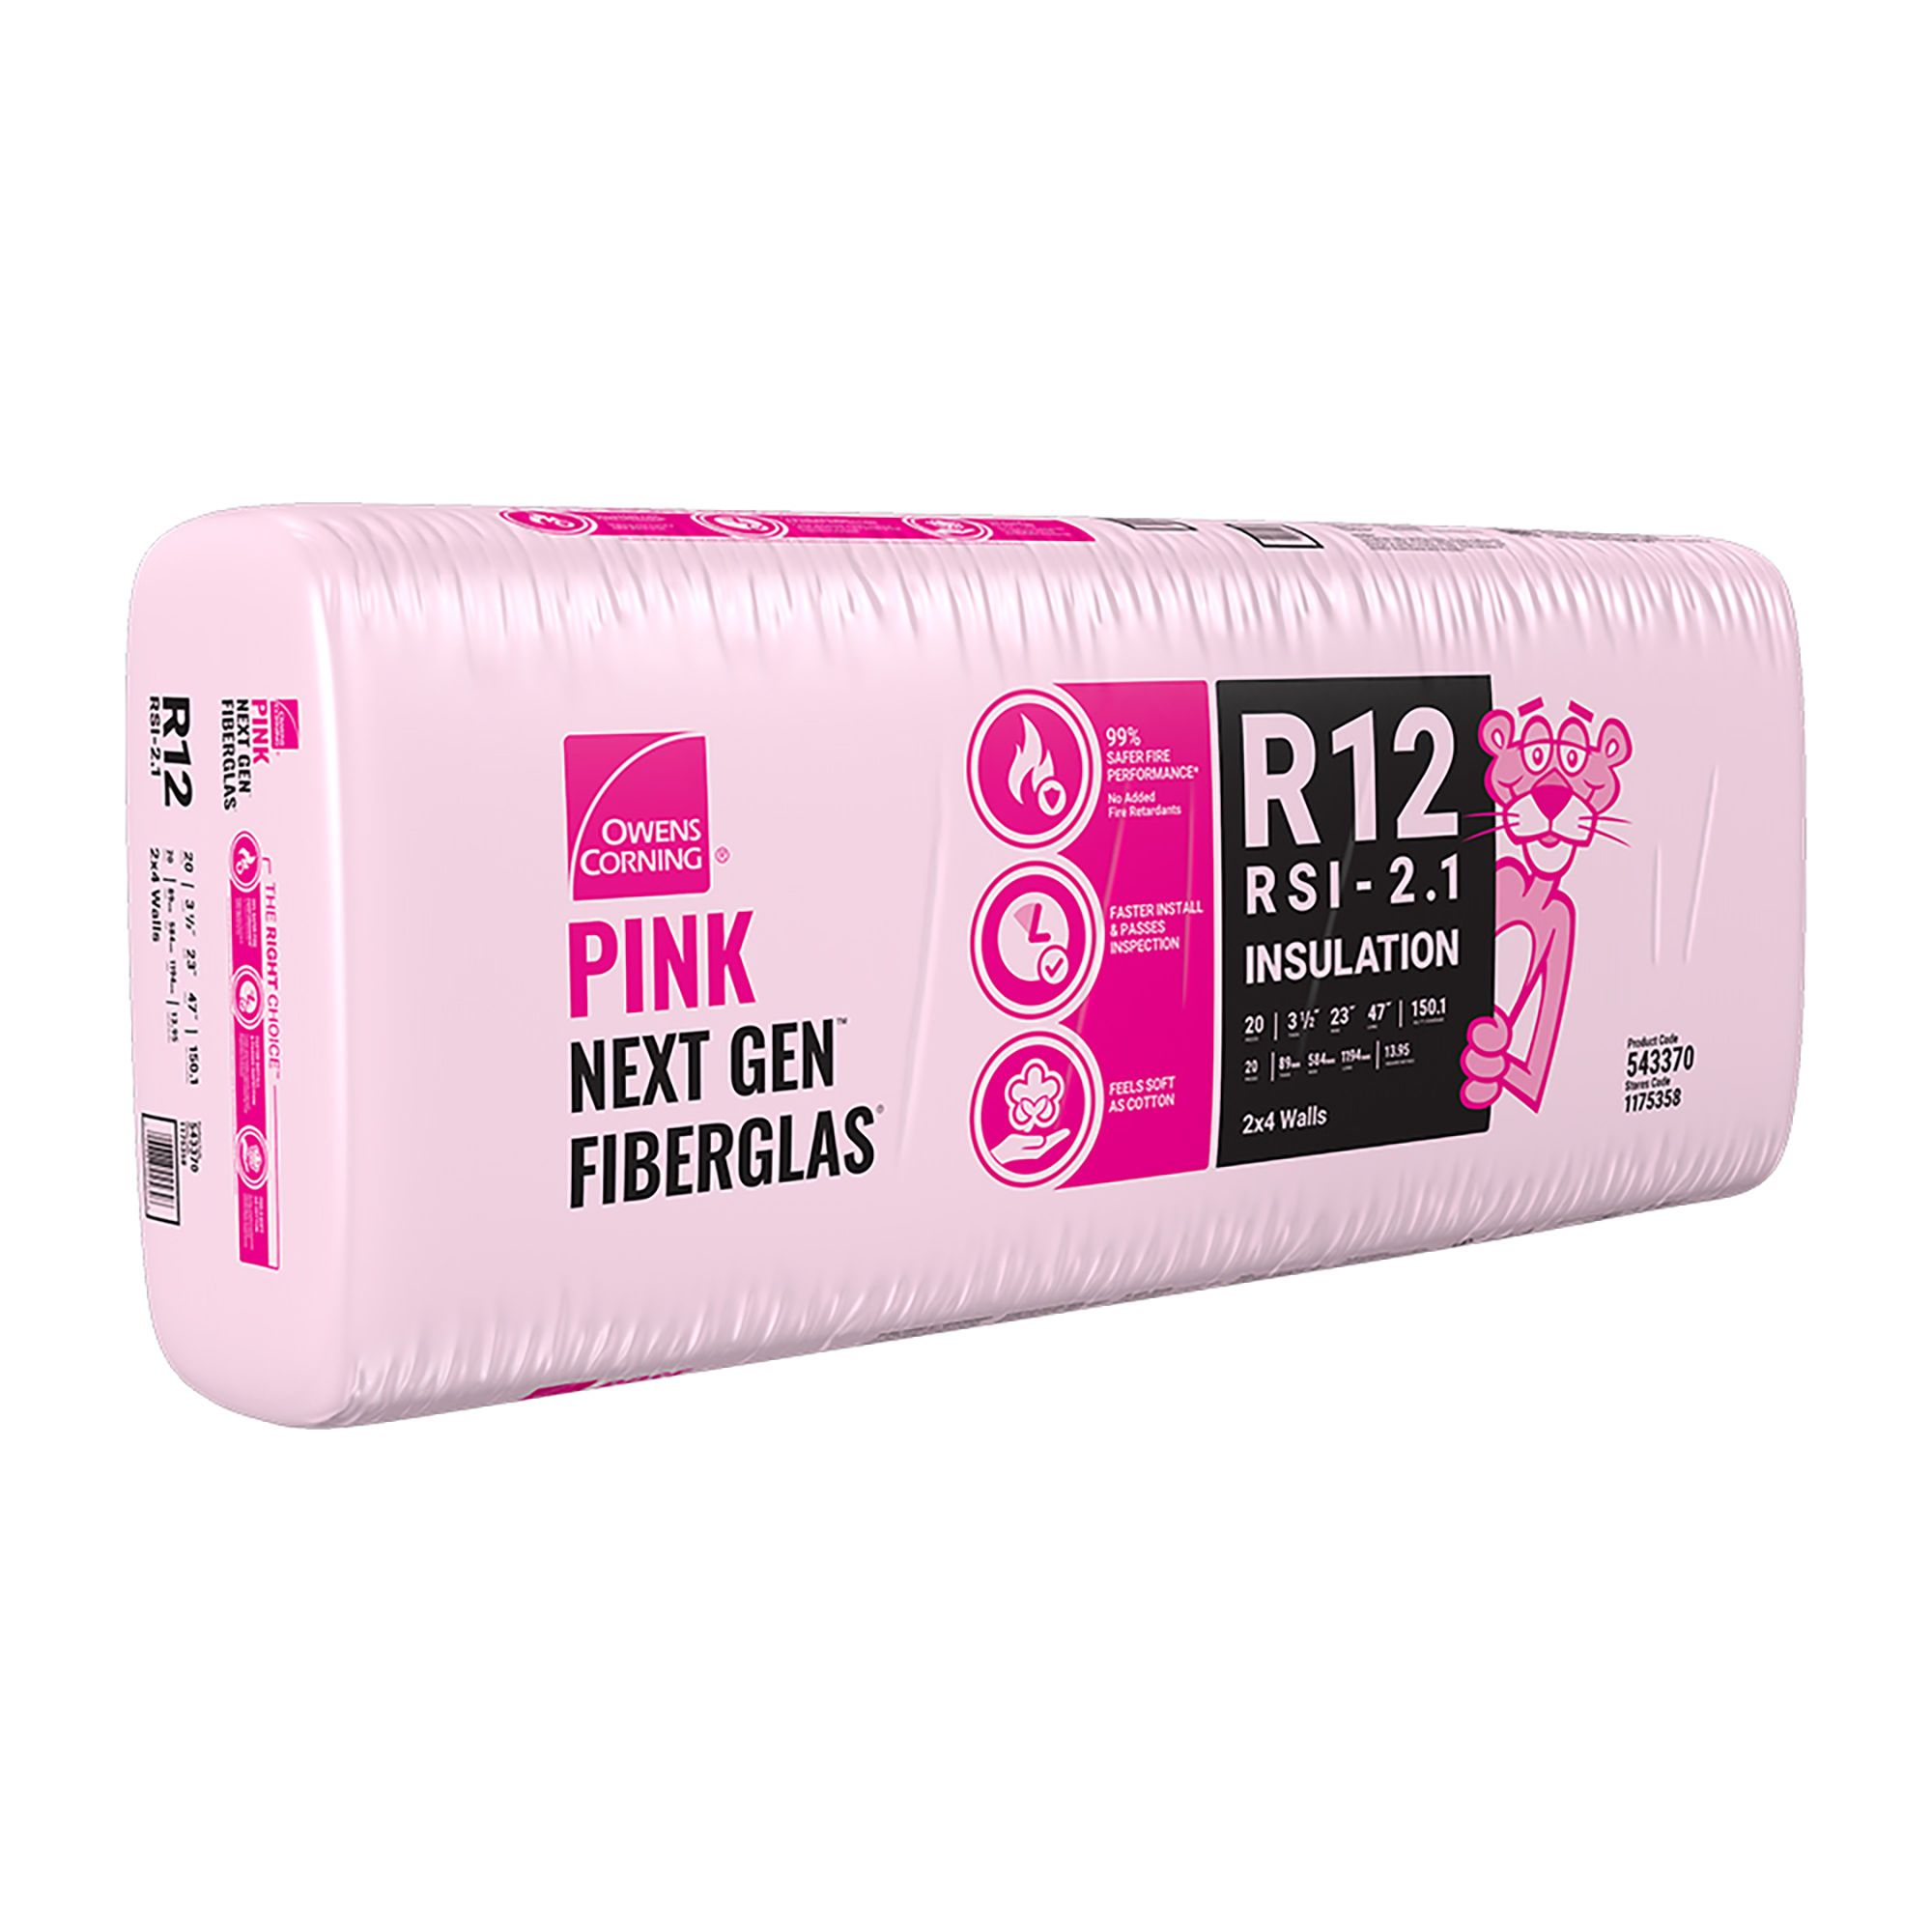 R-12 Pink Next Gen Fiberglas Insulation - 23